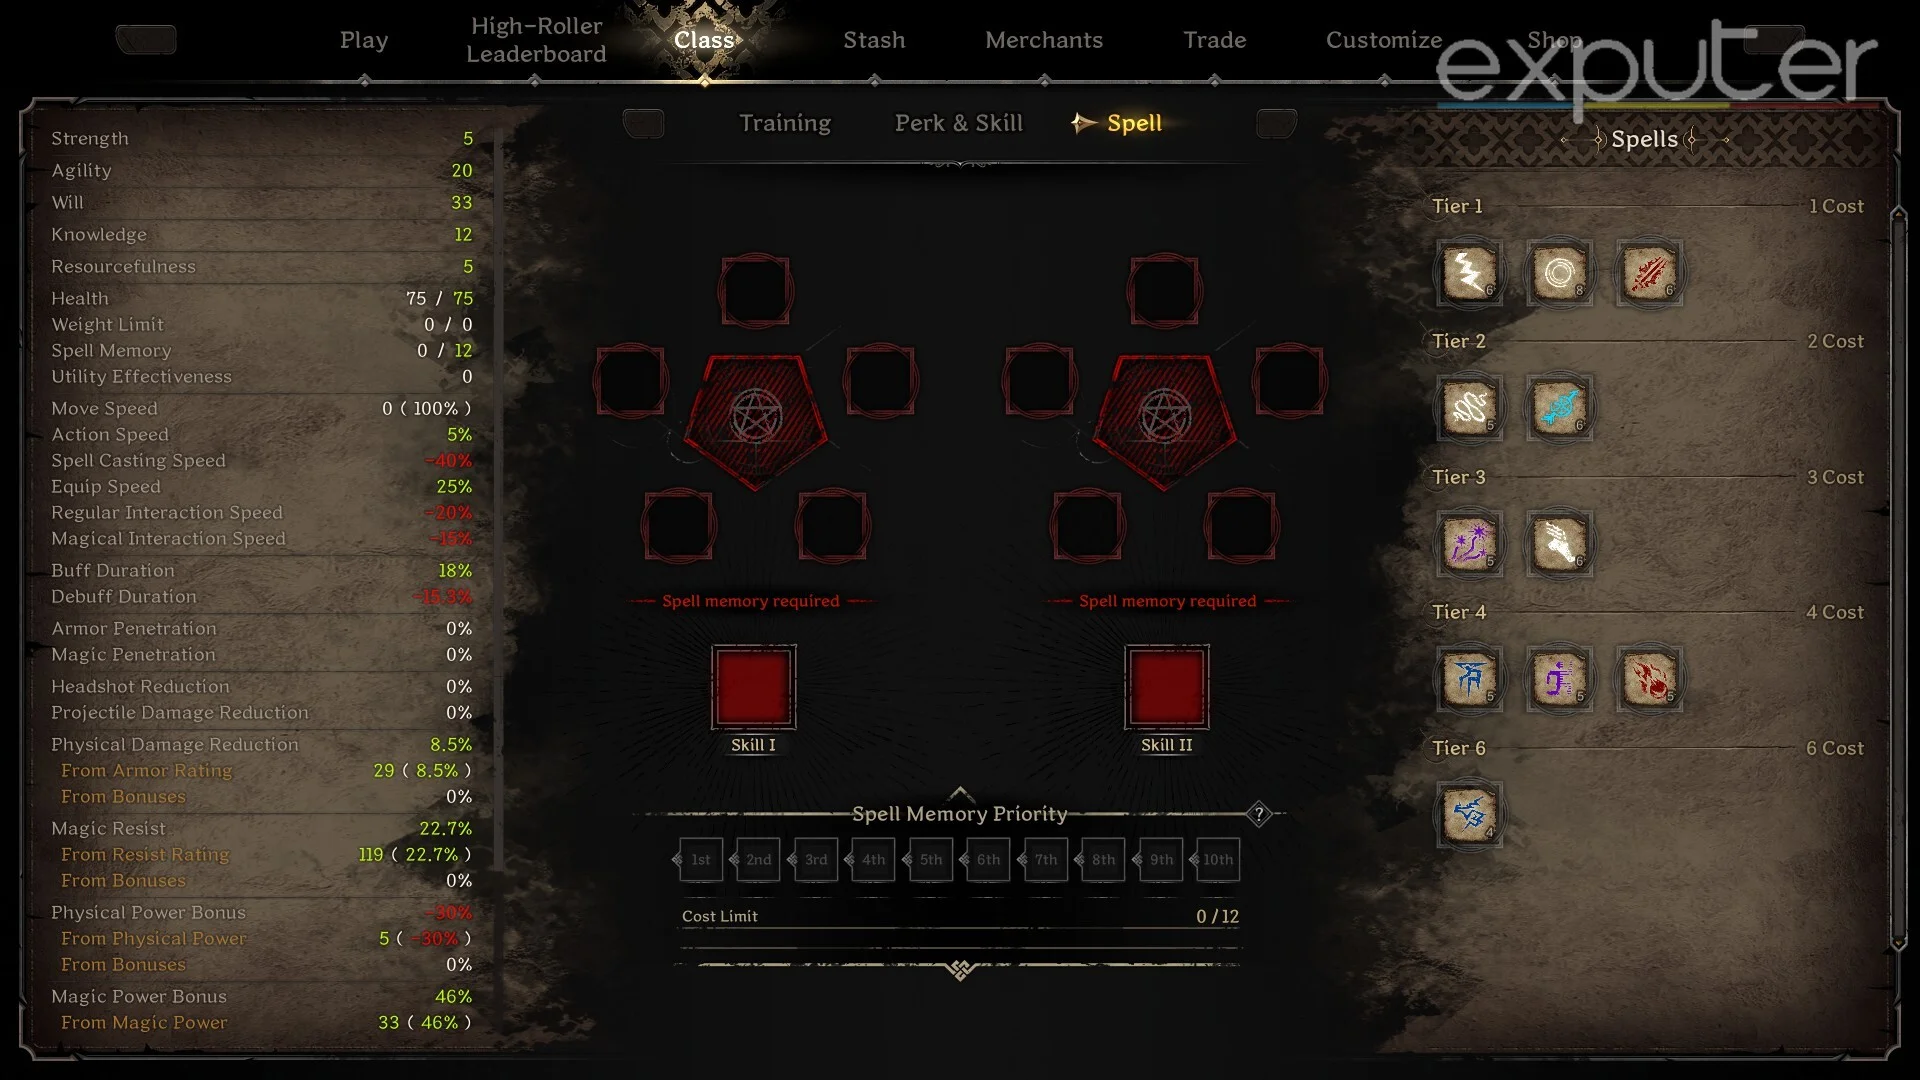 Dark and Darker Cleric build: best perks, skills, and spells - Dot Esports